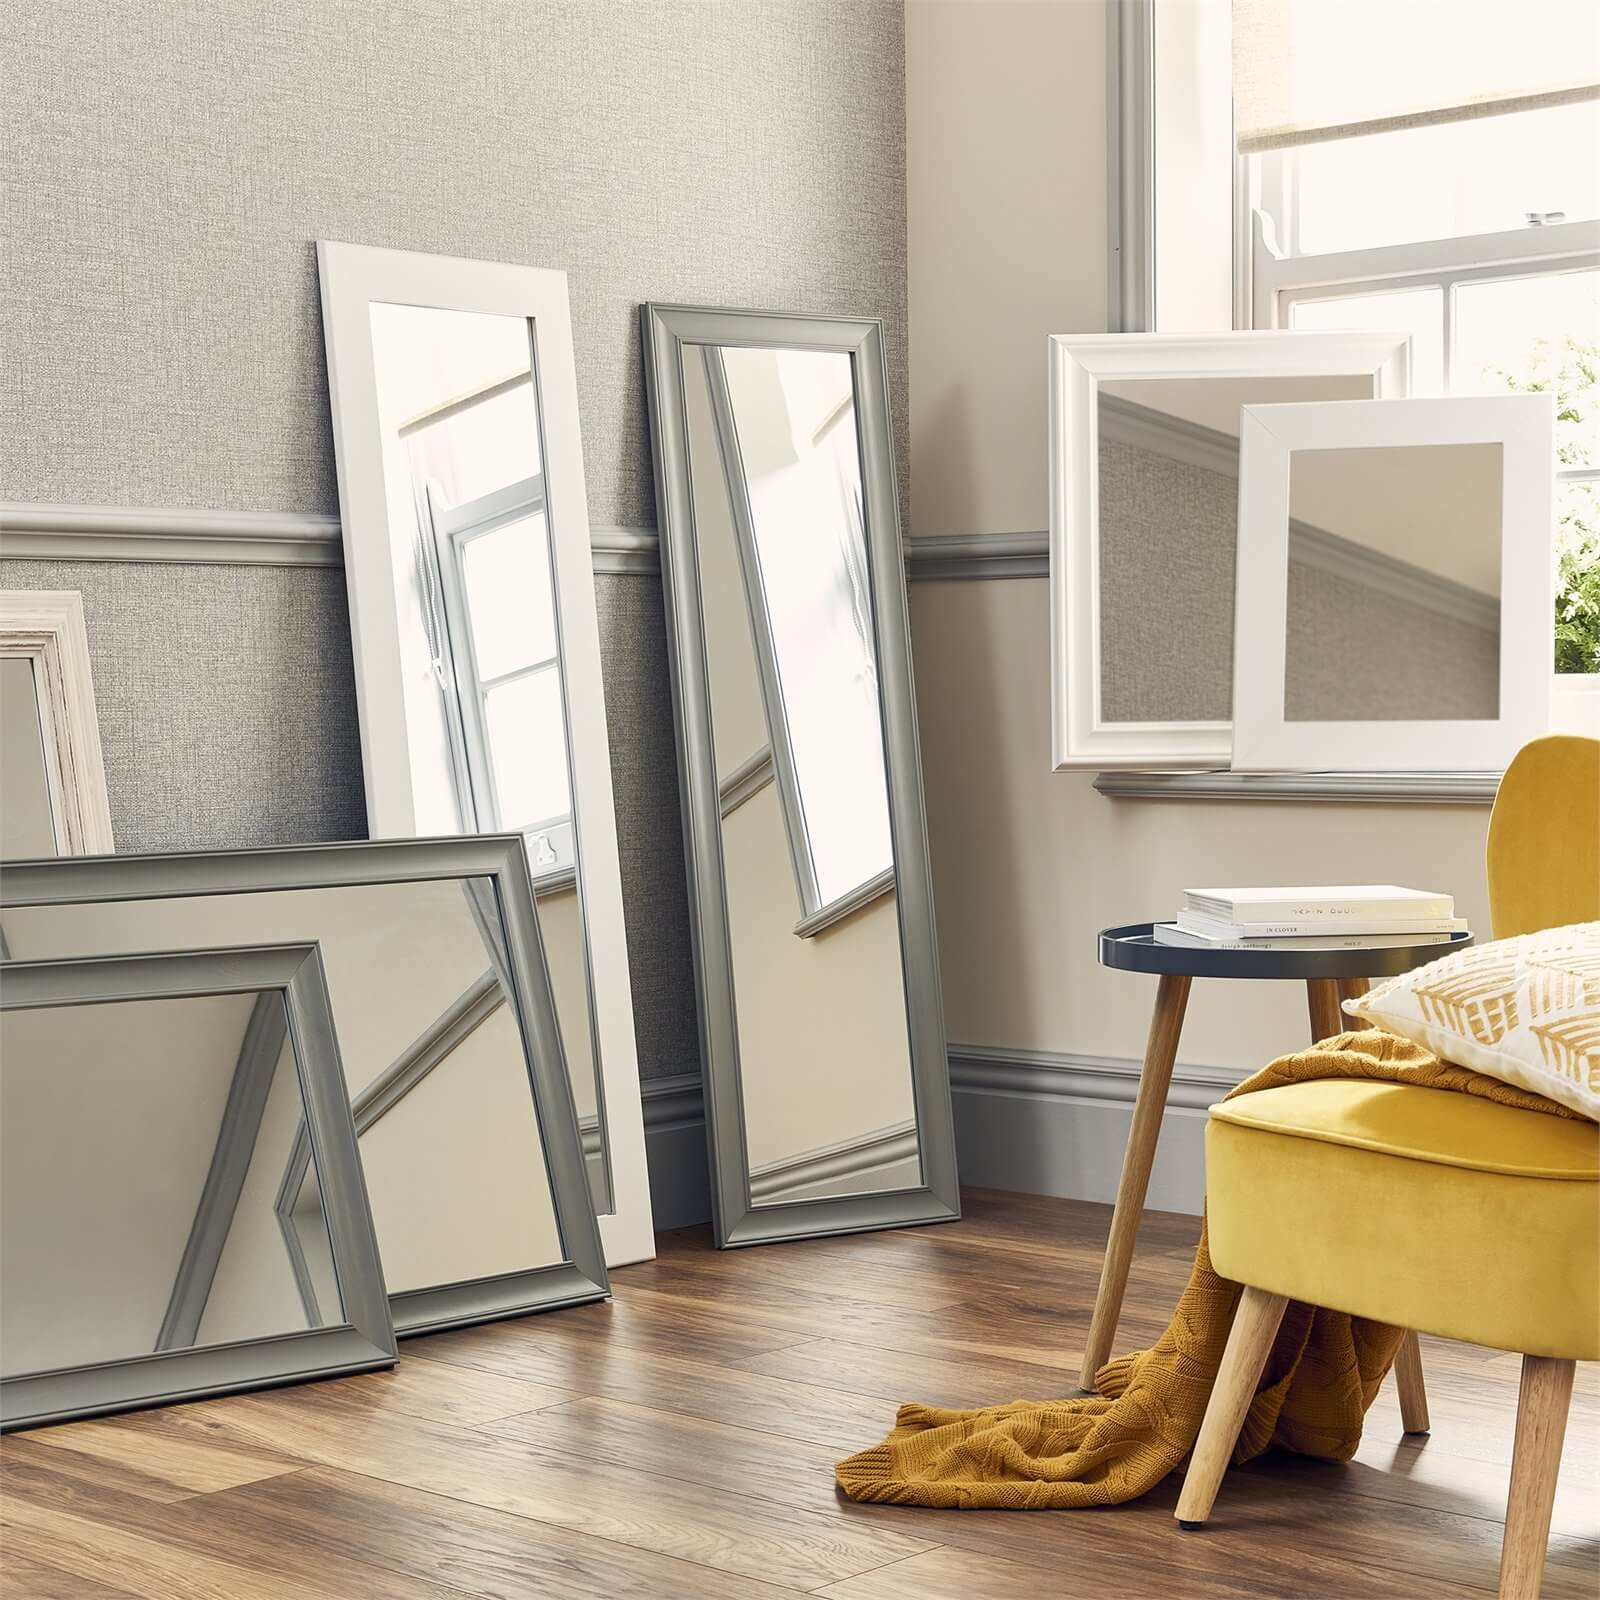 Coldrake Framed Mirror Grey Wood 51x61cm